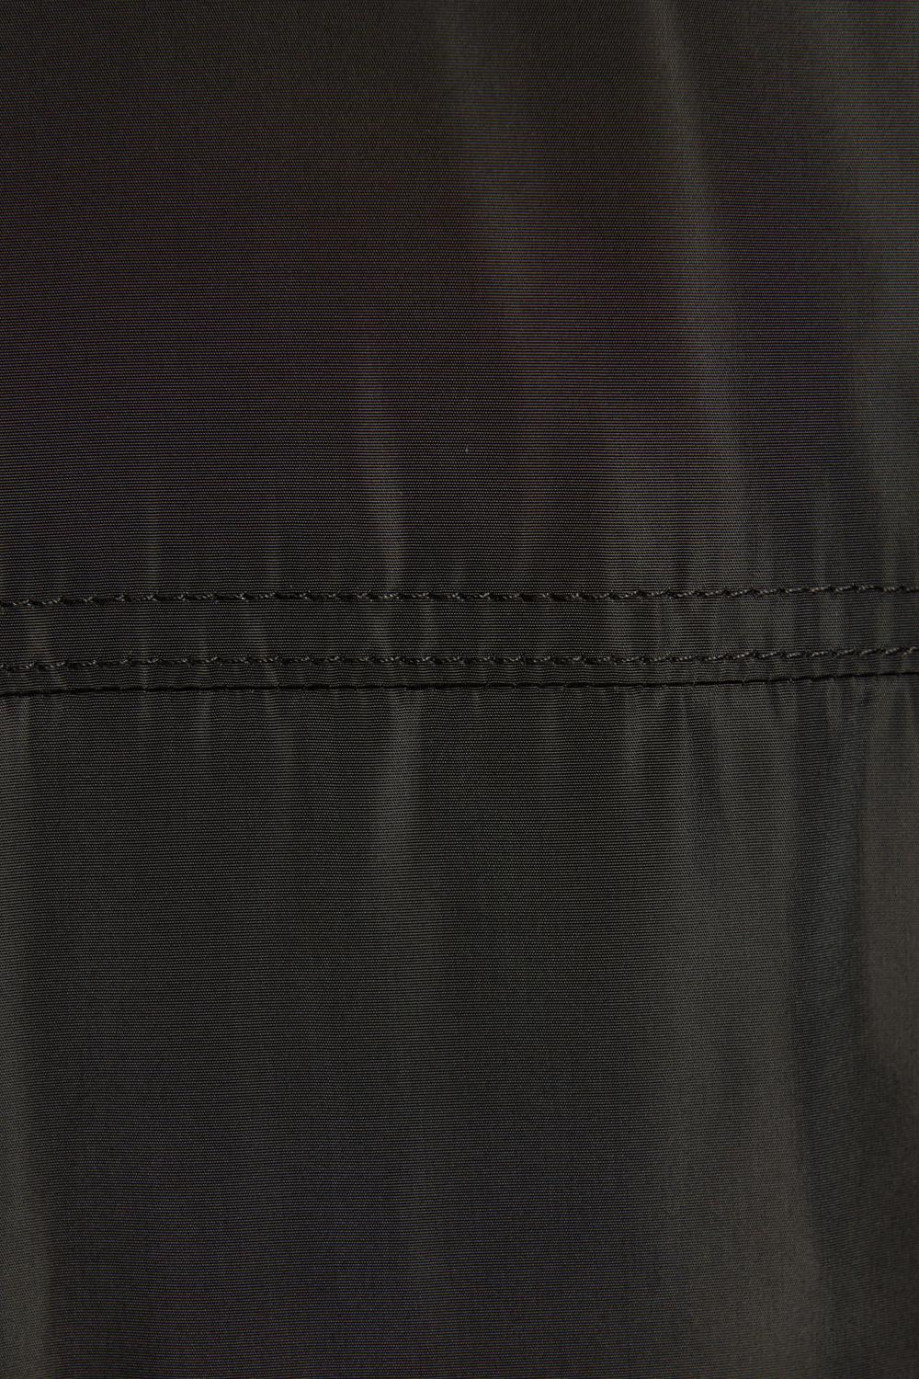 Chaqueta liviana negra impermeable con capota y contrastes